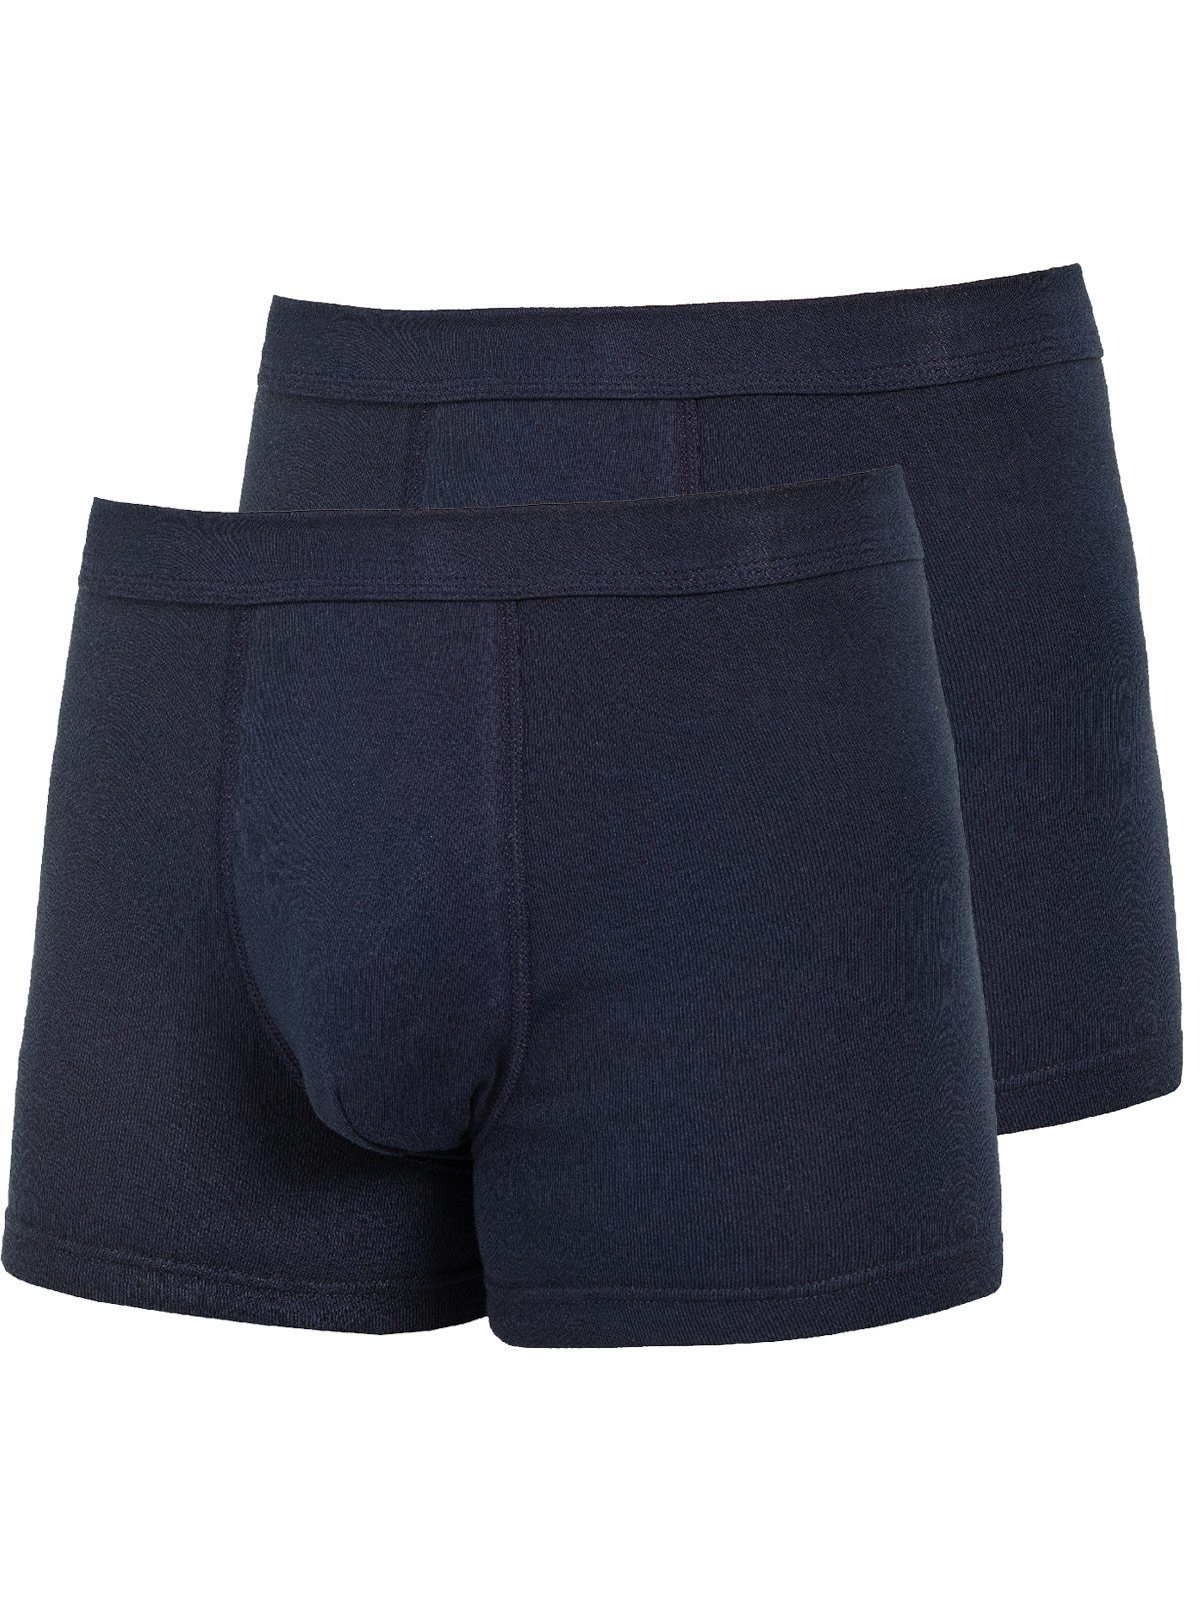 Herren Pants Pack dunkelblau Cotton Bio (Packung, 2er 2-St) KUMPF Pants Retro hohe Markenqualität